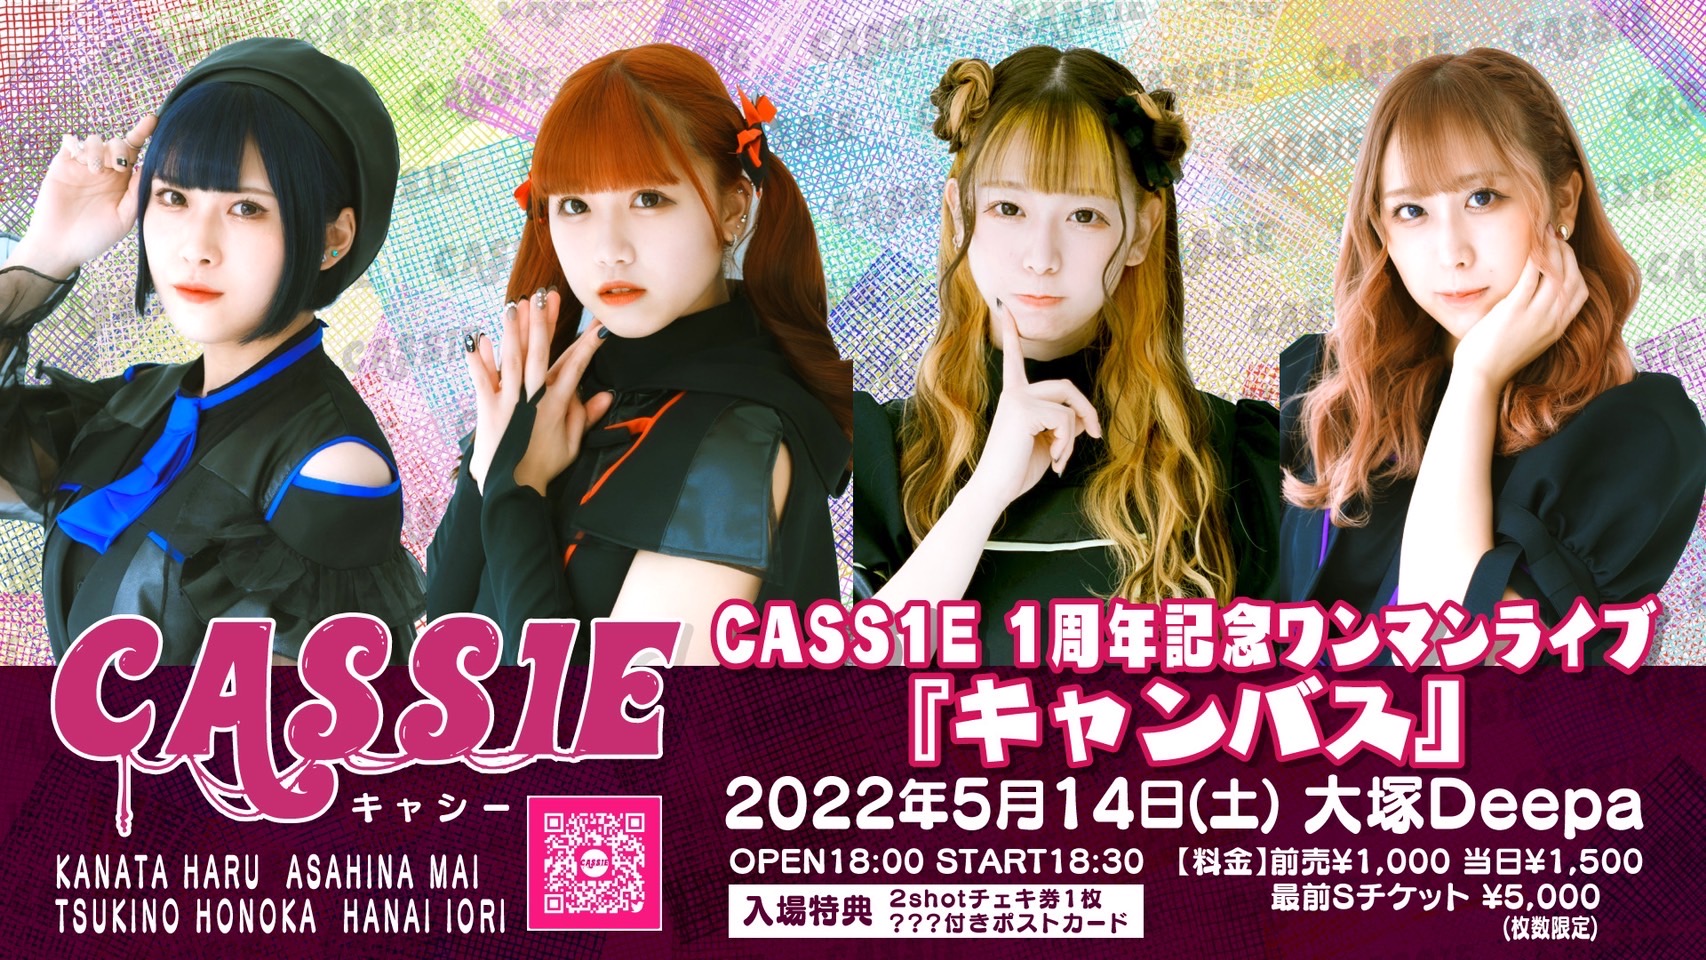 CASS1E 1周年記念ワンマンライブ【キャンバス】